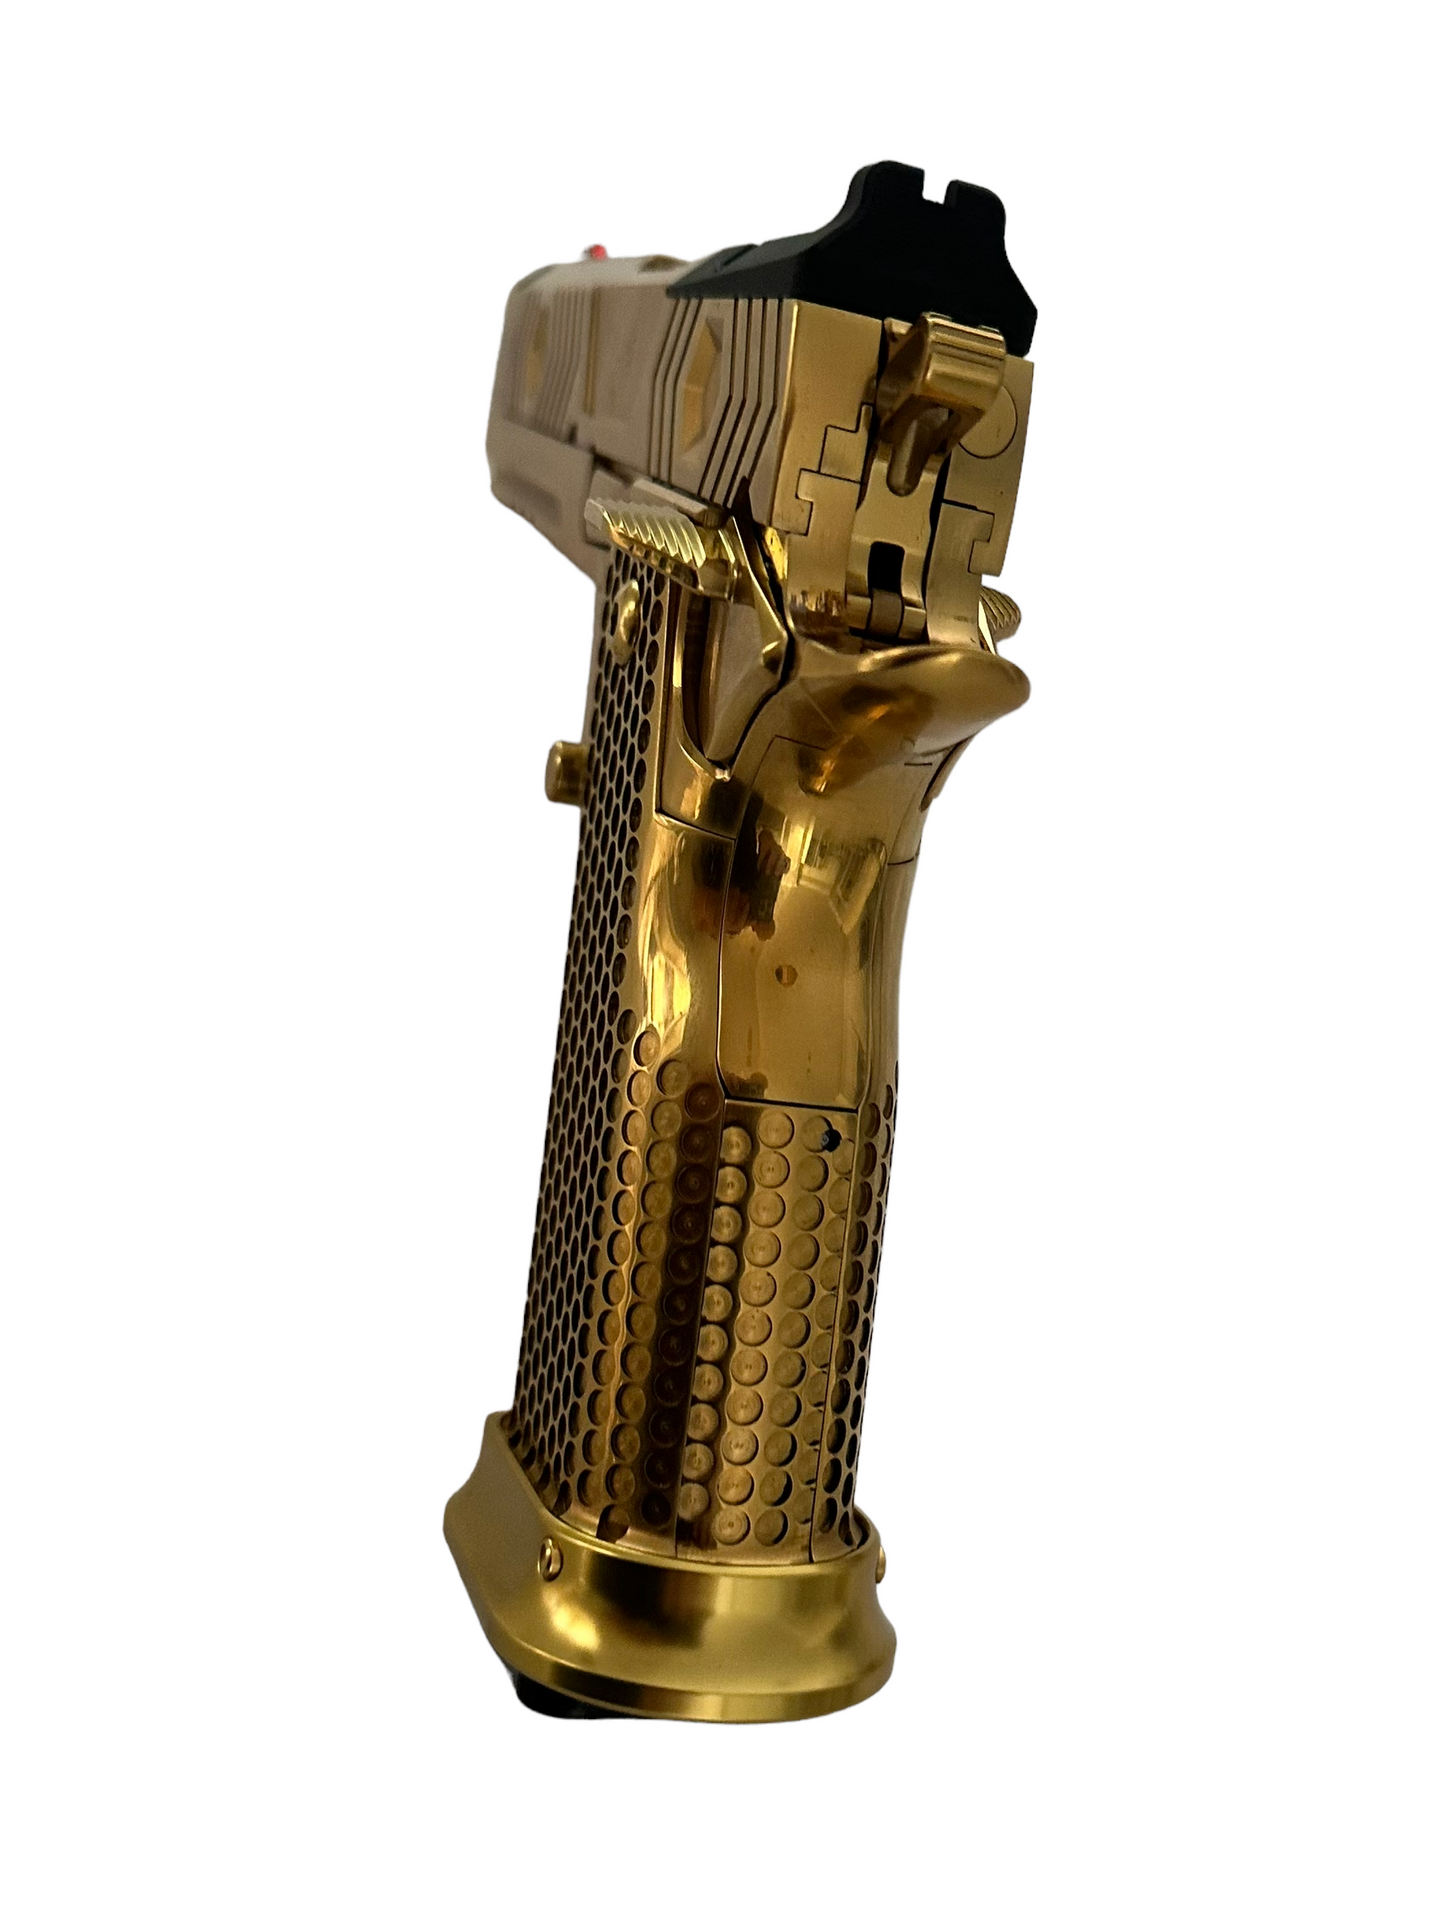 PHOENIX TRINITY H-TAC CUSTOM 1 of 1 FULL POLISHED GOLD TIN OPTIC READY GOLD PLATE. COMP’D 9mm